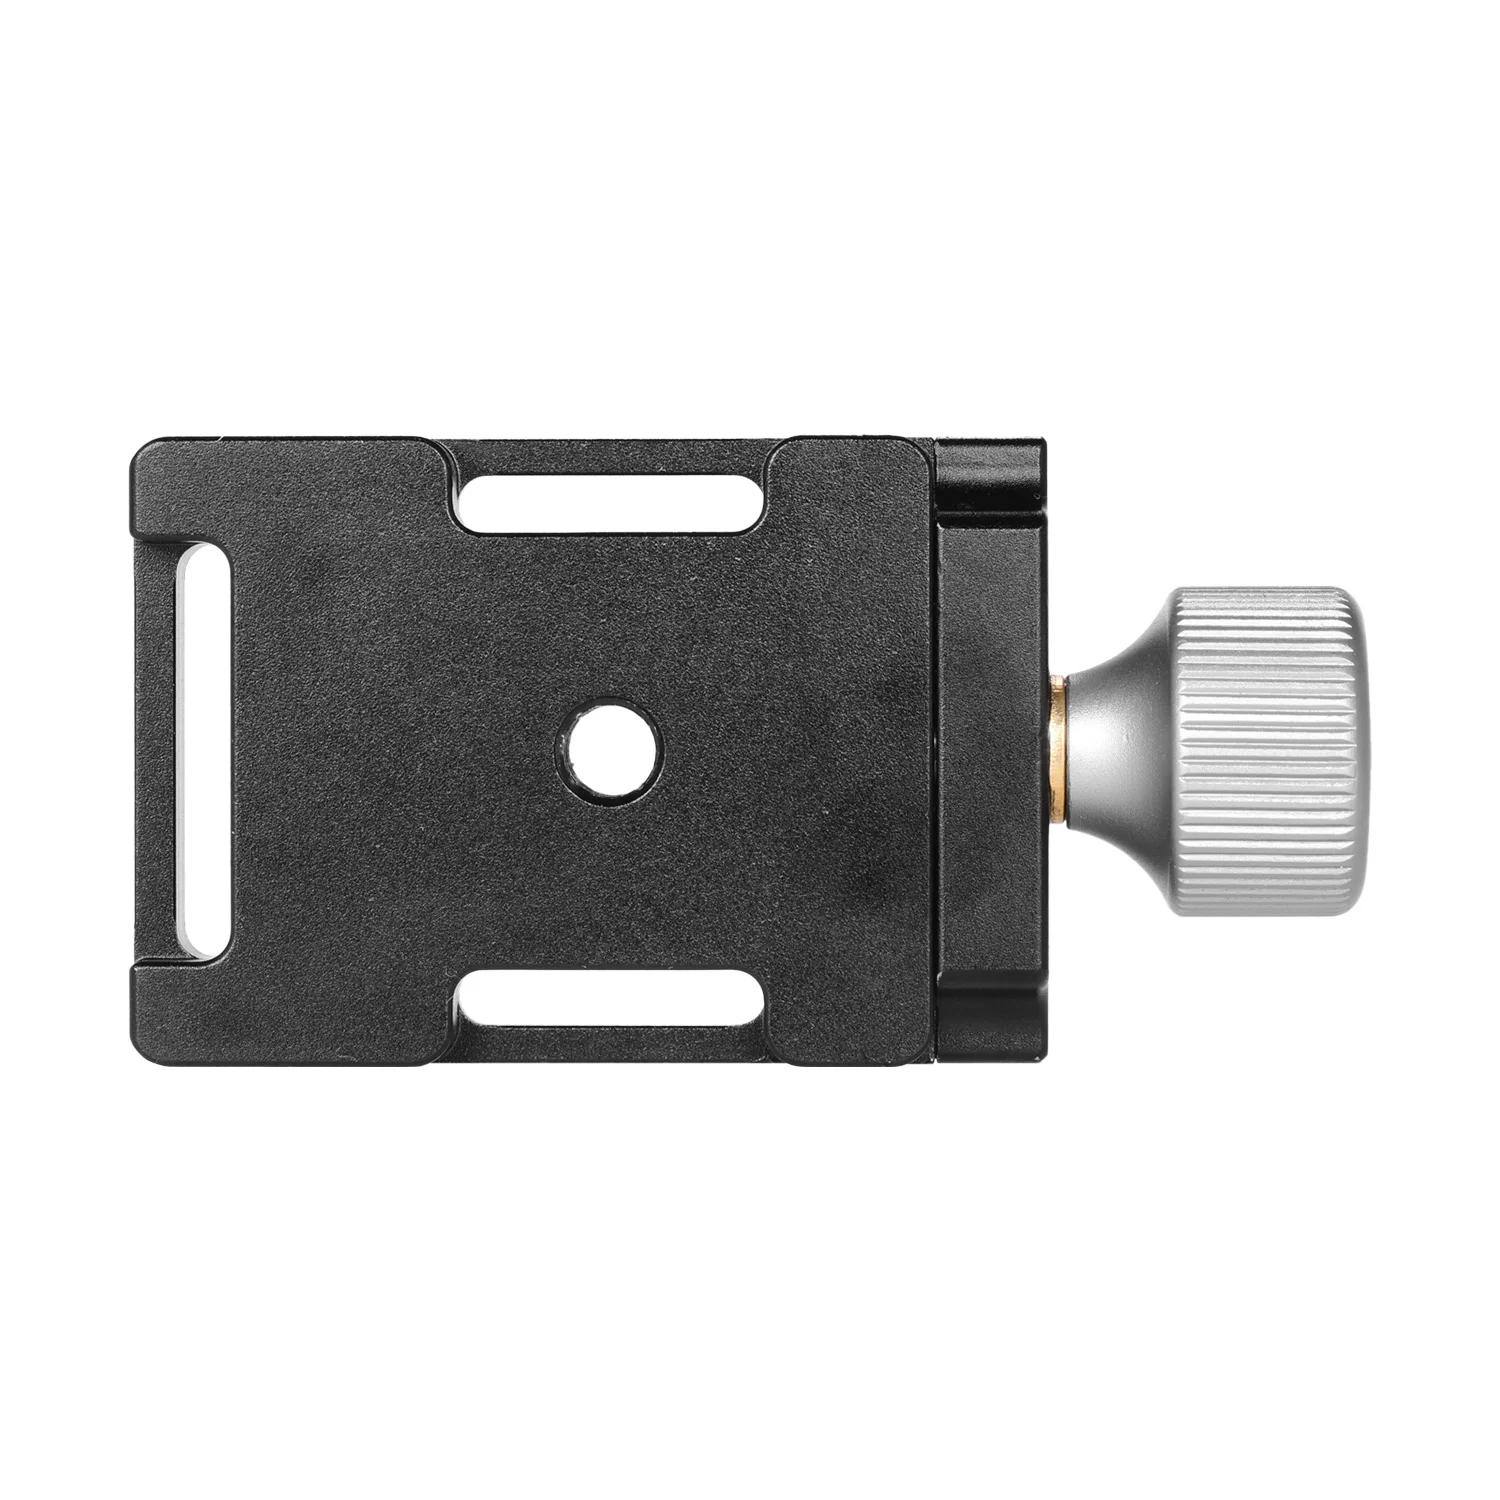 Arca-Swiss Neewer 38mm Screw Knob Quick Release Clamp Adapter W/ Hand Strap Gap Arca Swiss 804808402390 